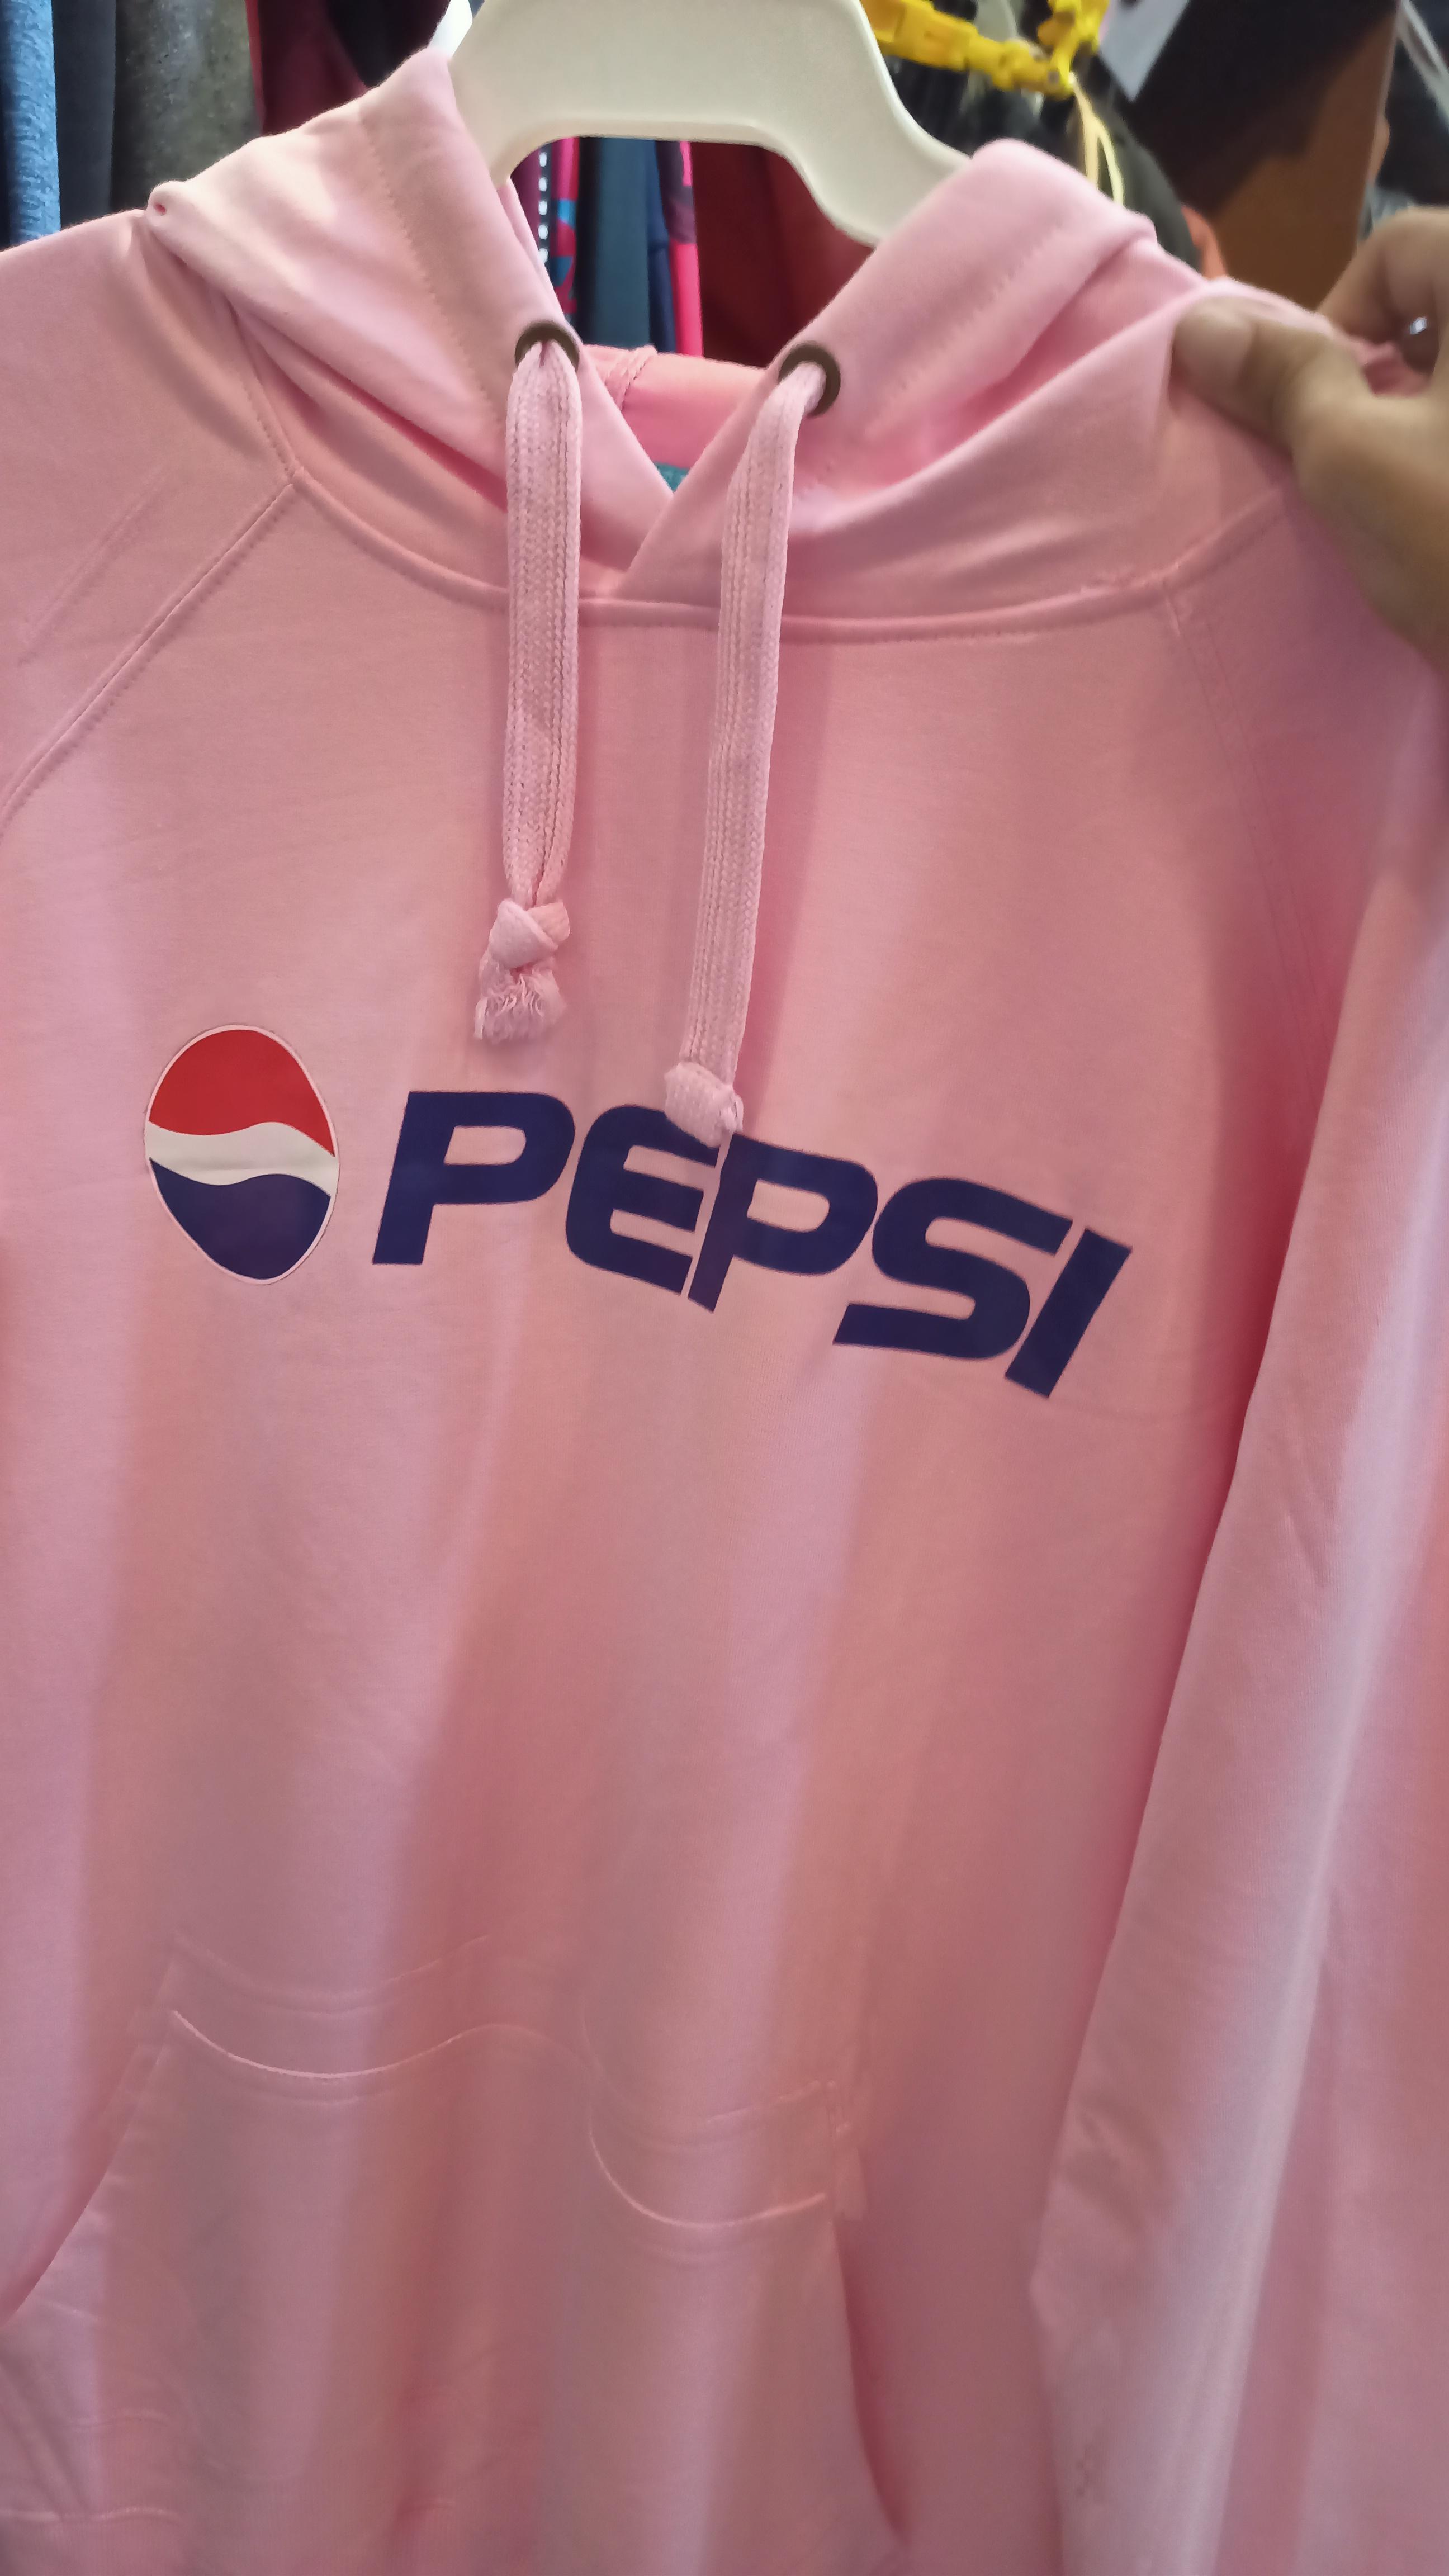 Pepsi shirt lmao | Scrolller